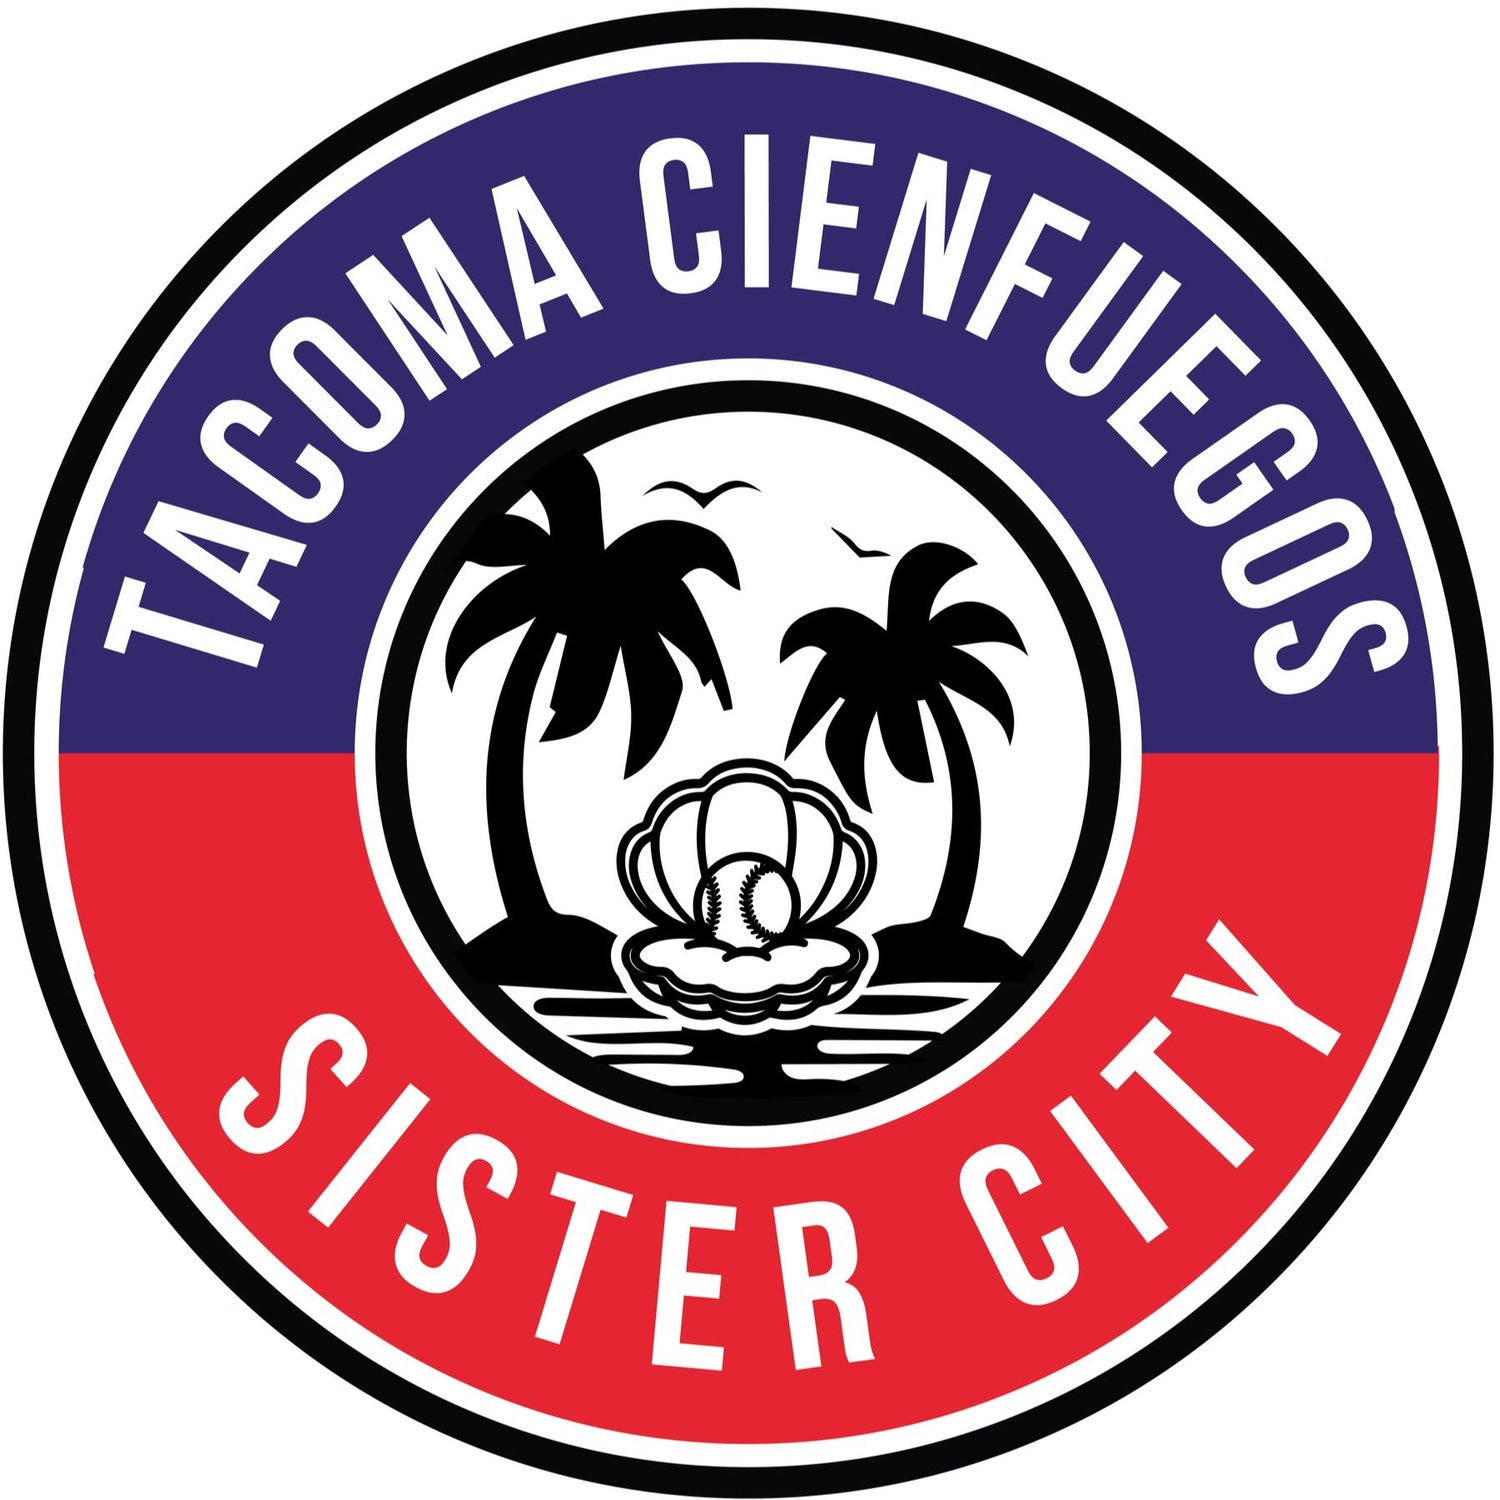 Tacoma Cienfuegos Sister City